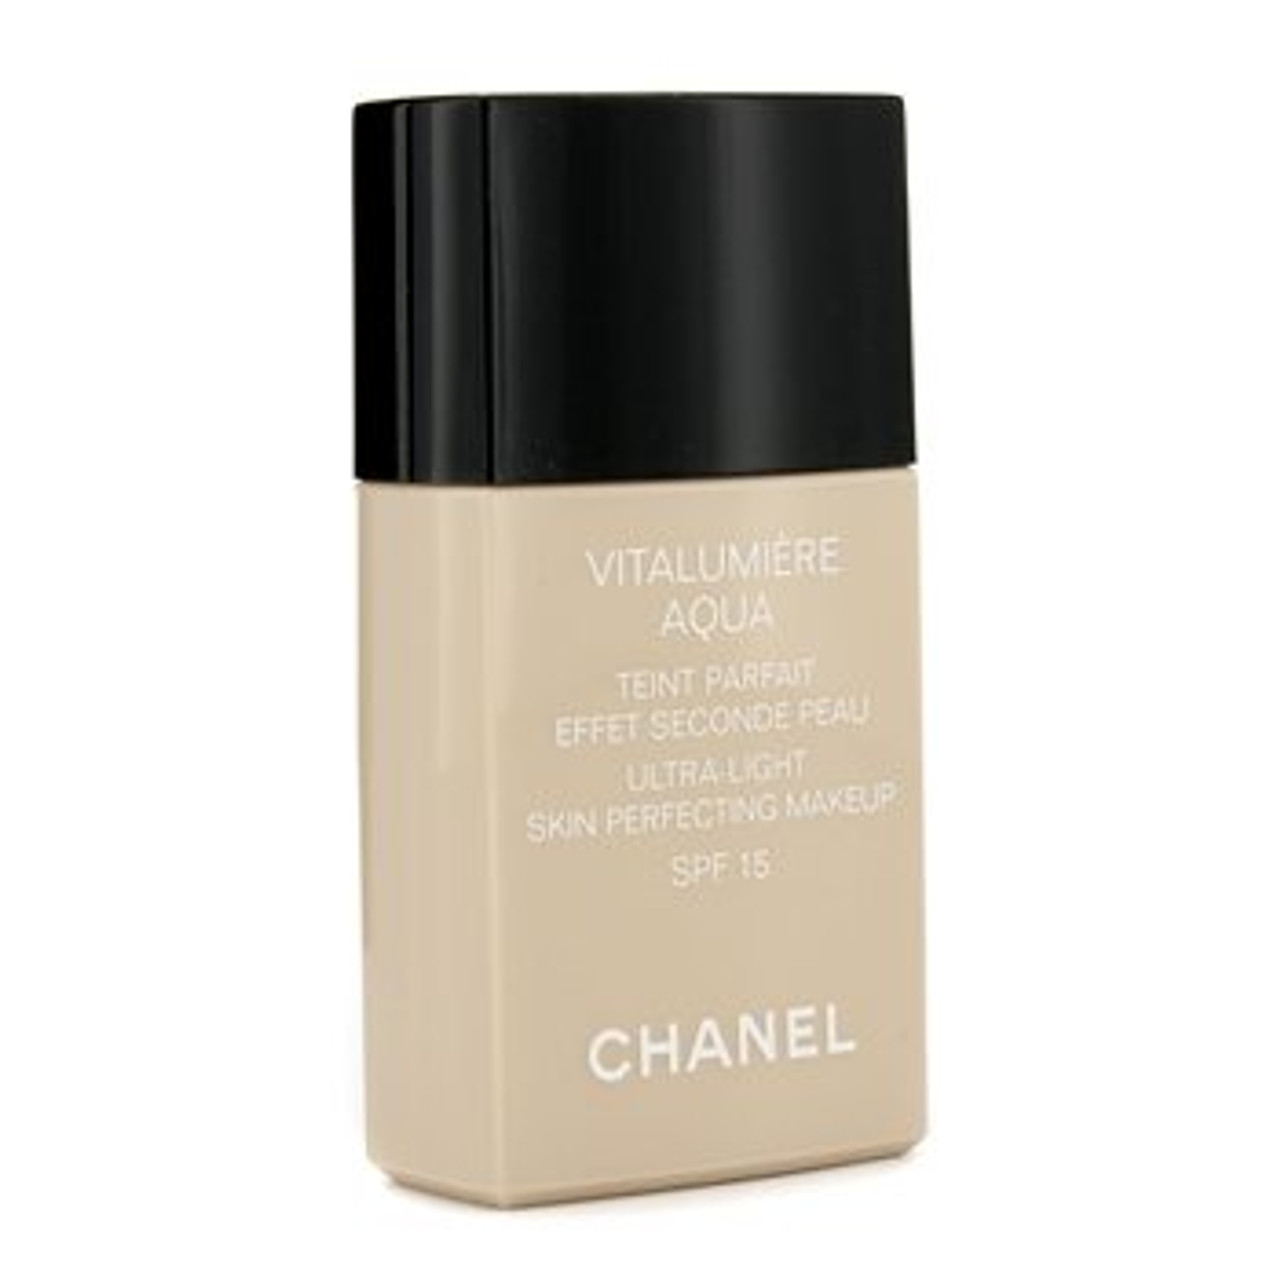 Chanel Vitalumiere Aqua Ultra Light Skin Perfecting Make Up SFP 15 - # B50  Beige Sienne 30ml/1oz